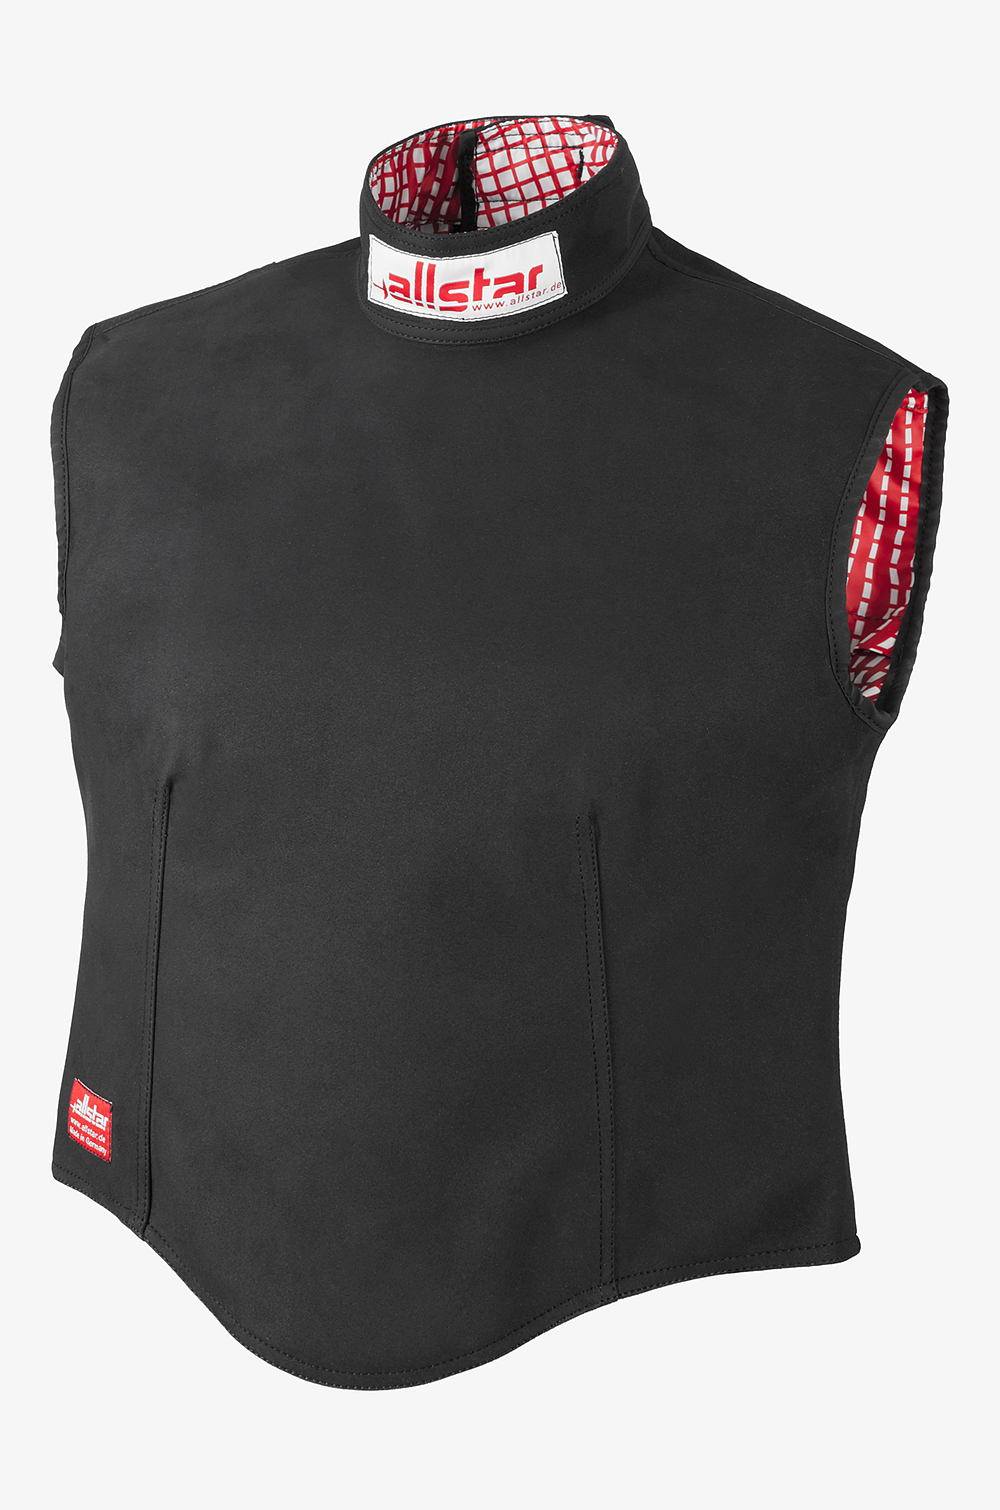 Alcantex Coach Vest w/o Sleeves Women